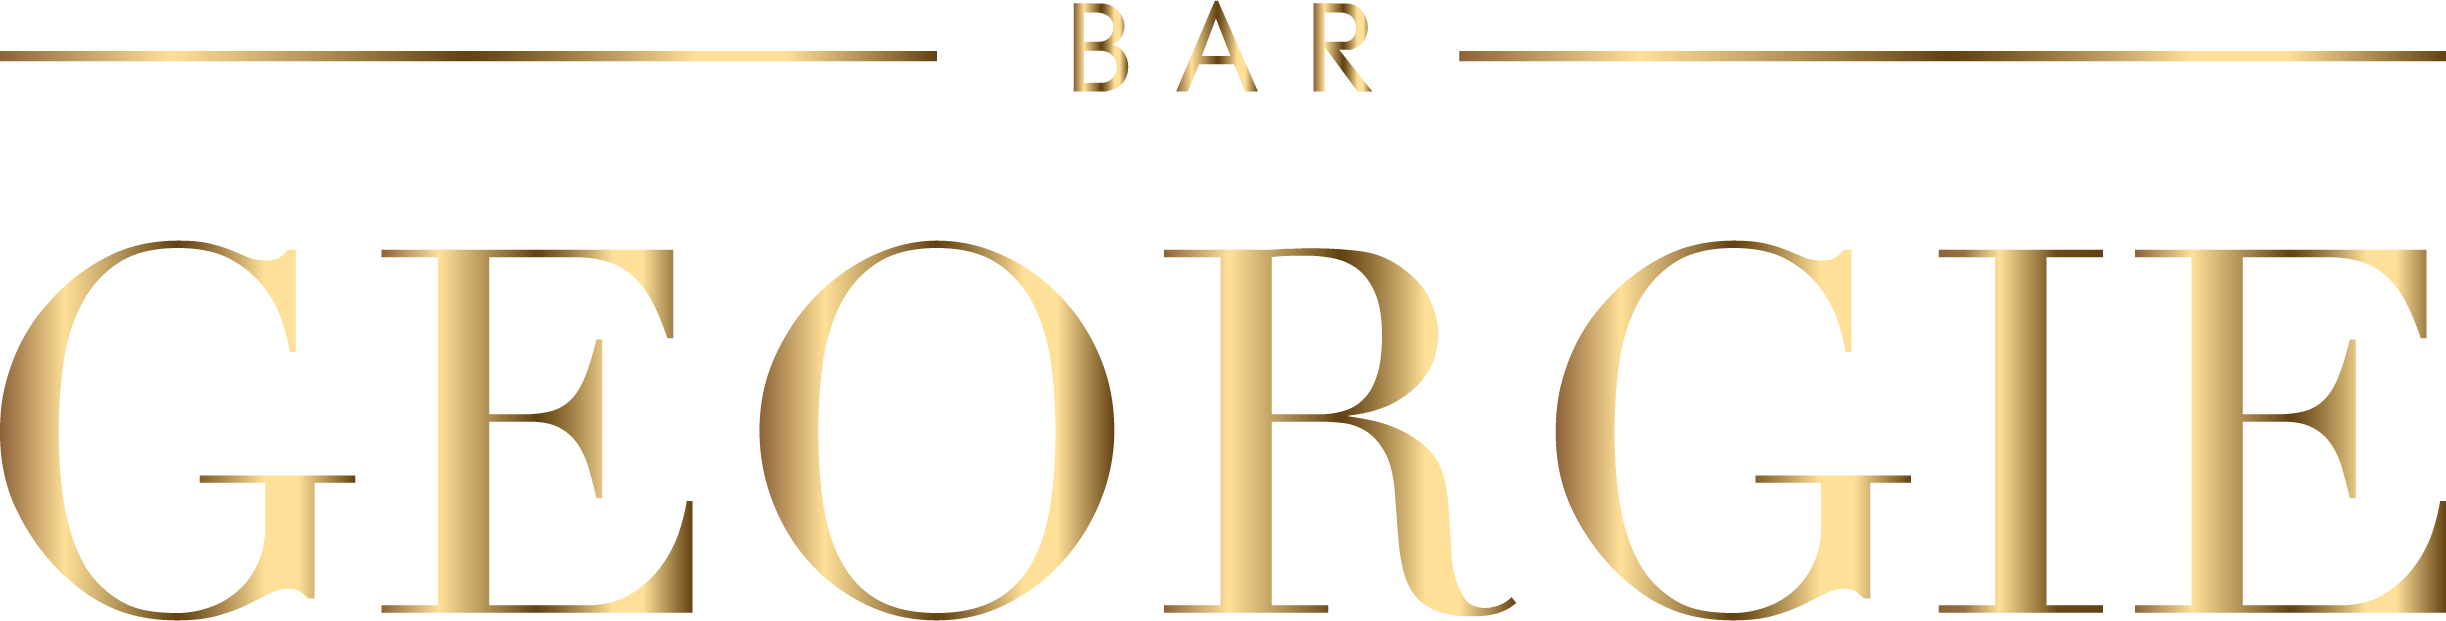 Bar georgie